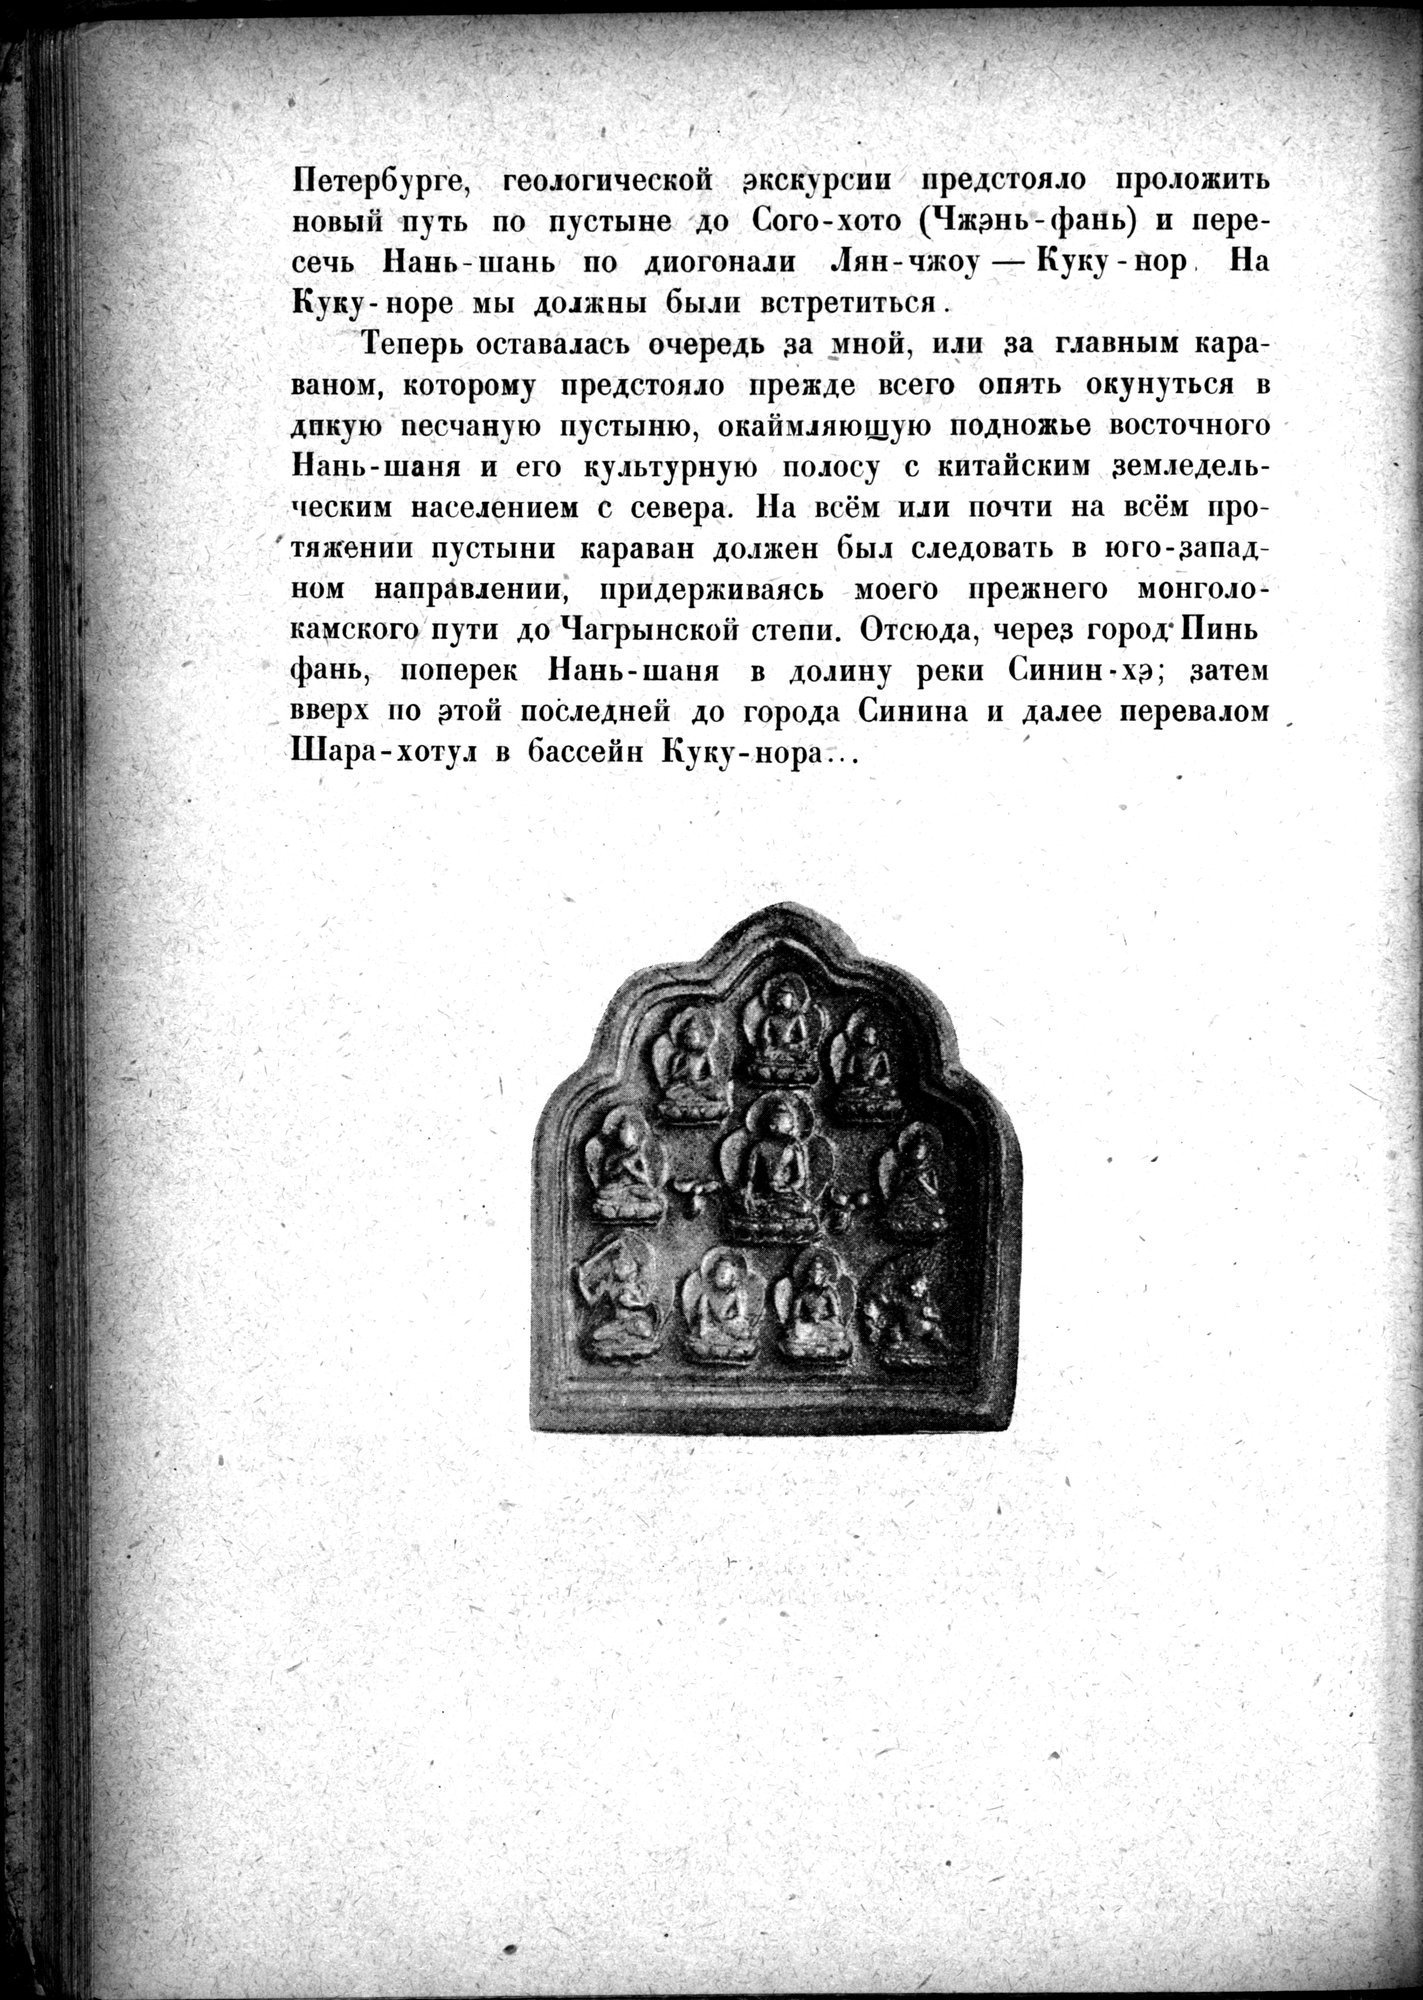 Mongoliya i Amdo i mertby gorod Khara-Khoto : vol.1 / Page 268 (Grayscale High Resolution Image)